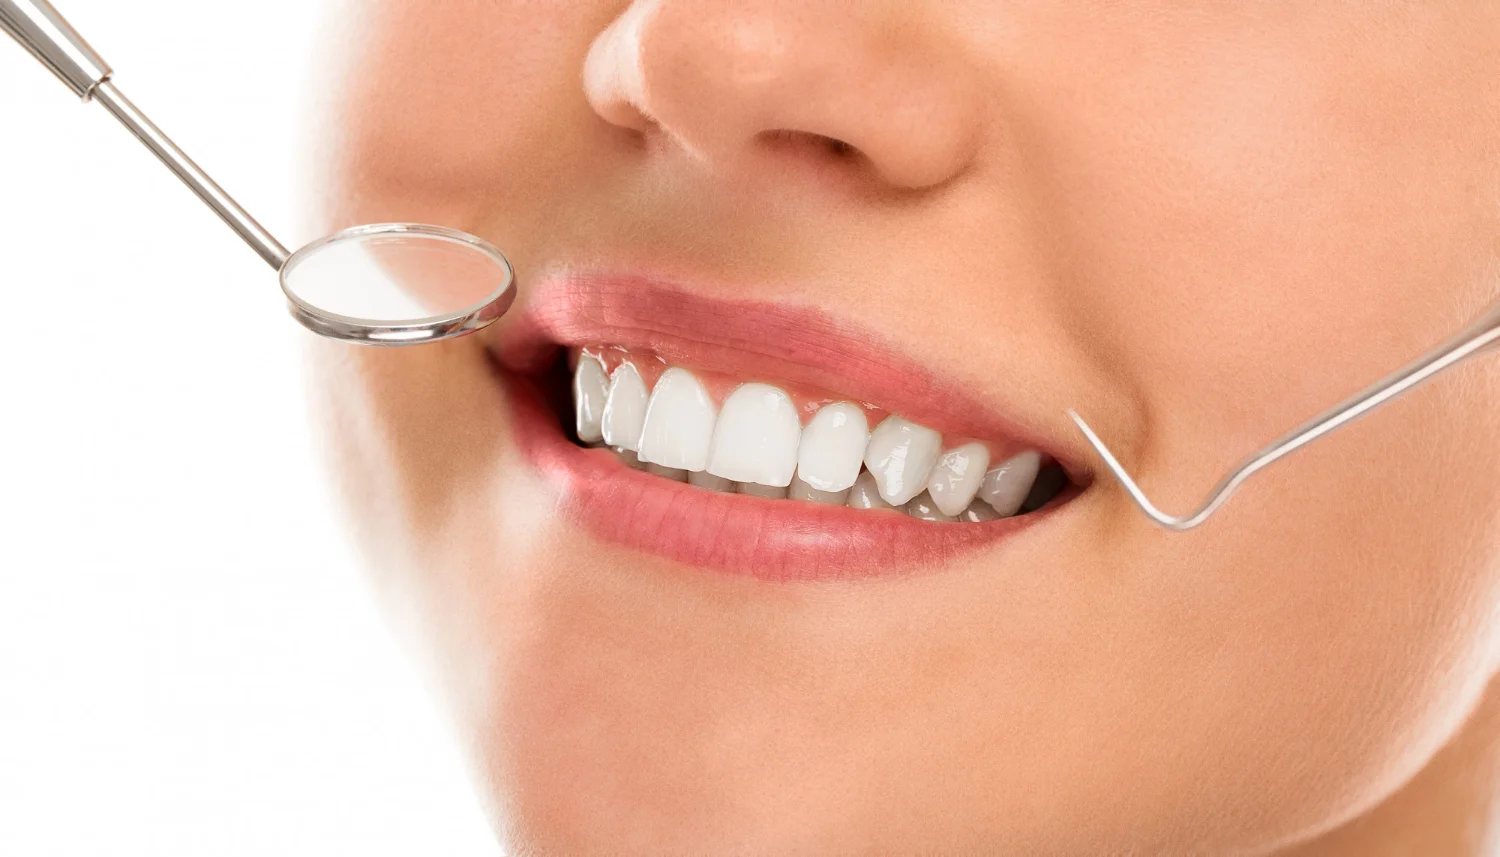 When Do You Need Teeth Whitening